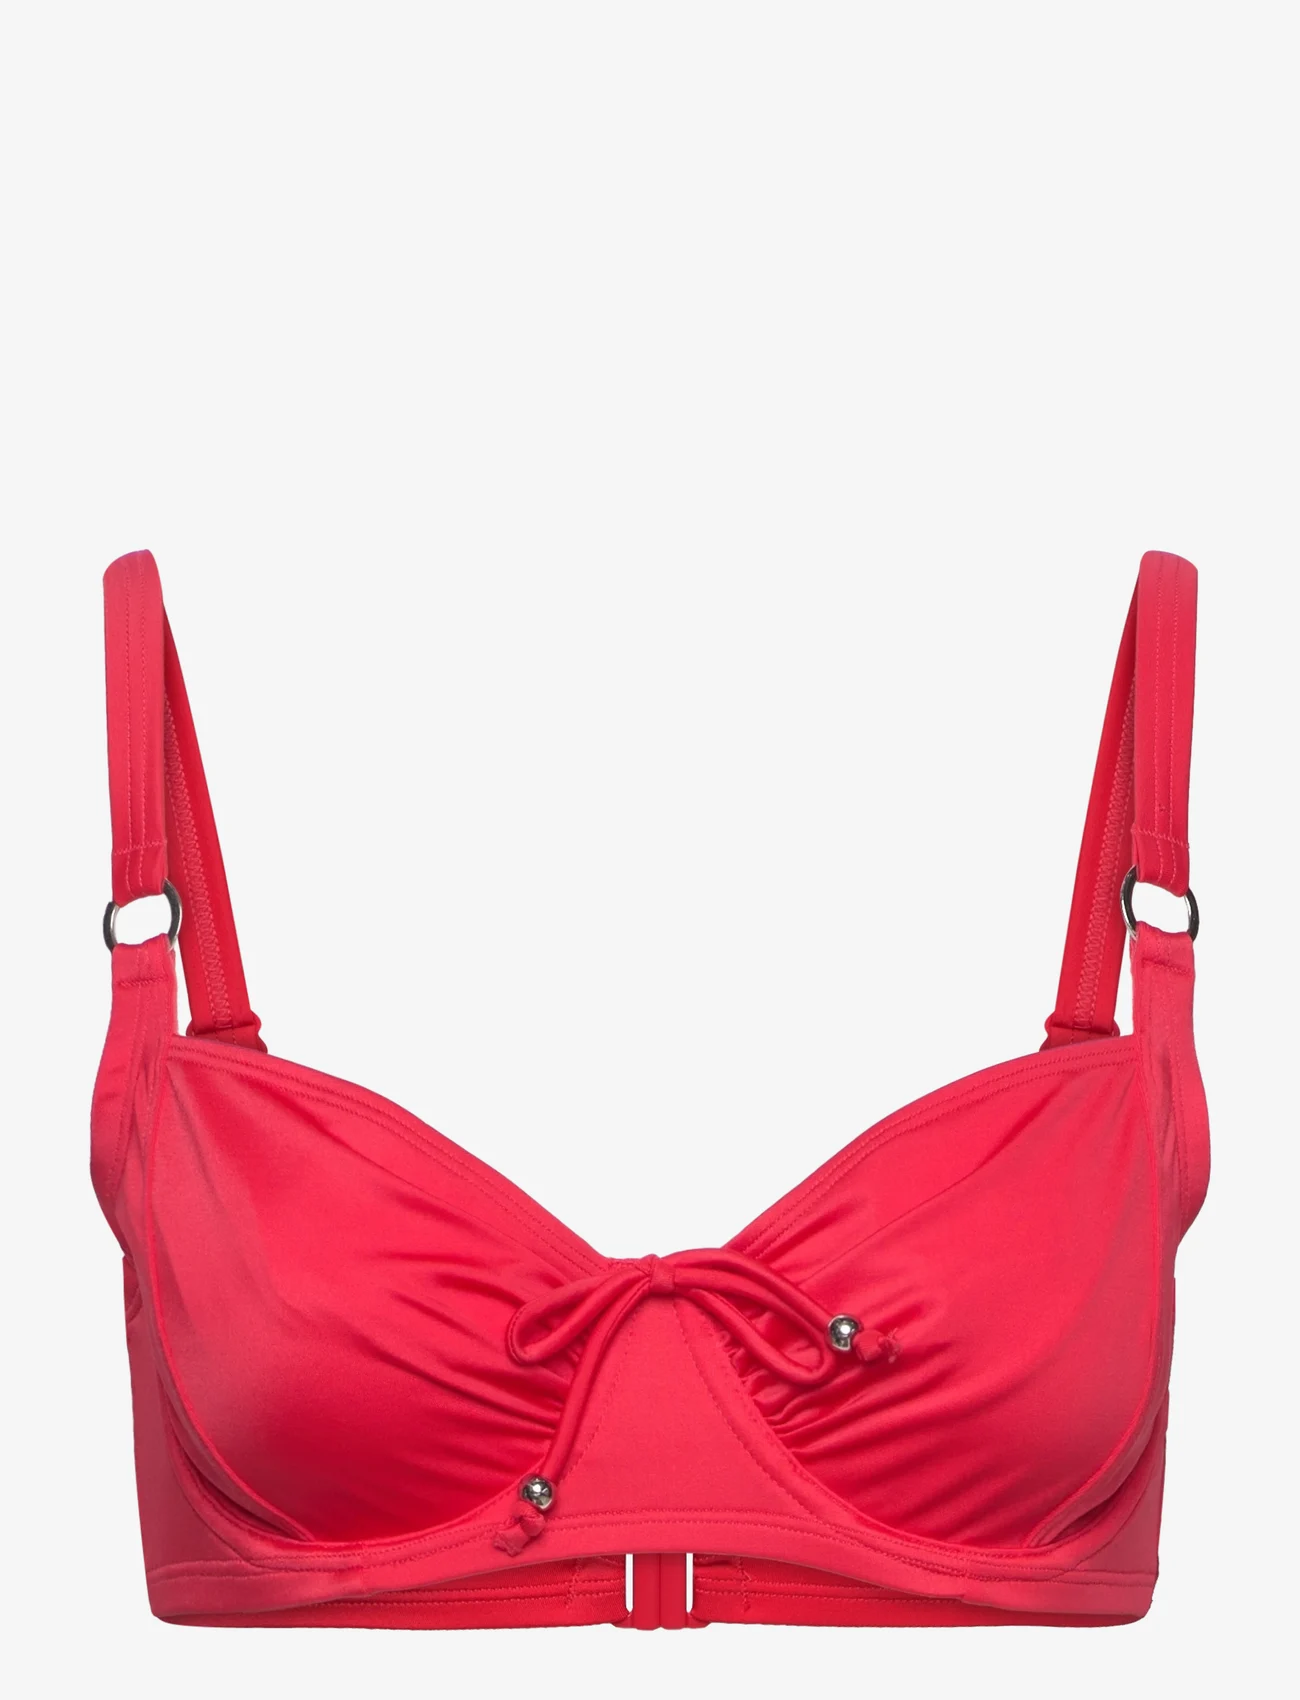 Dorina - FIJI/ECO BIKINI_TOP - bikinitoppe med bøjle - red - 0